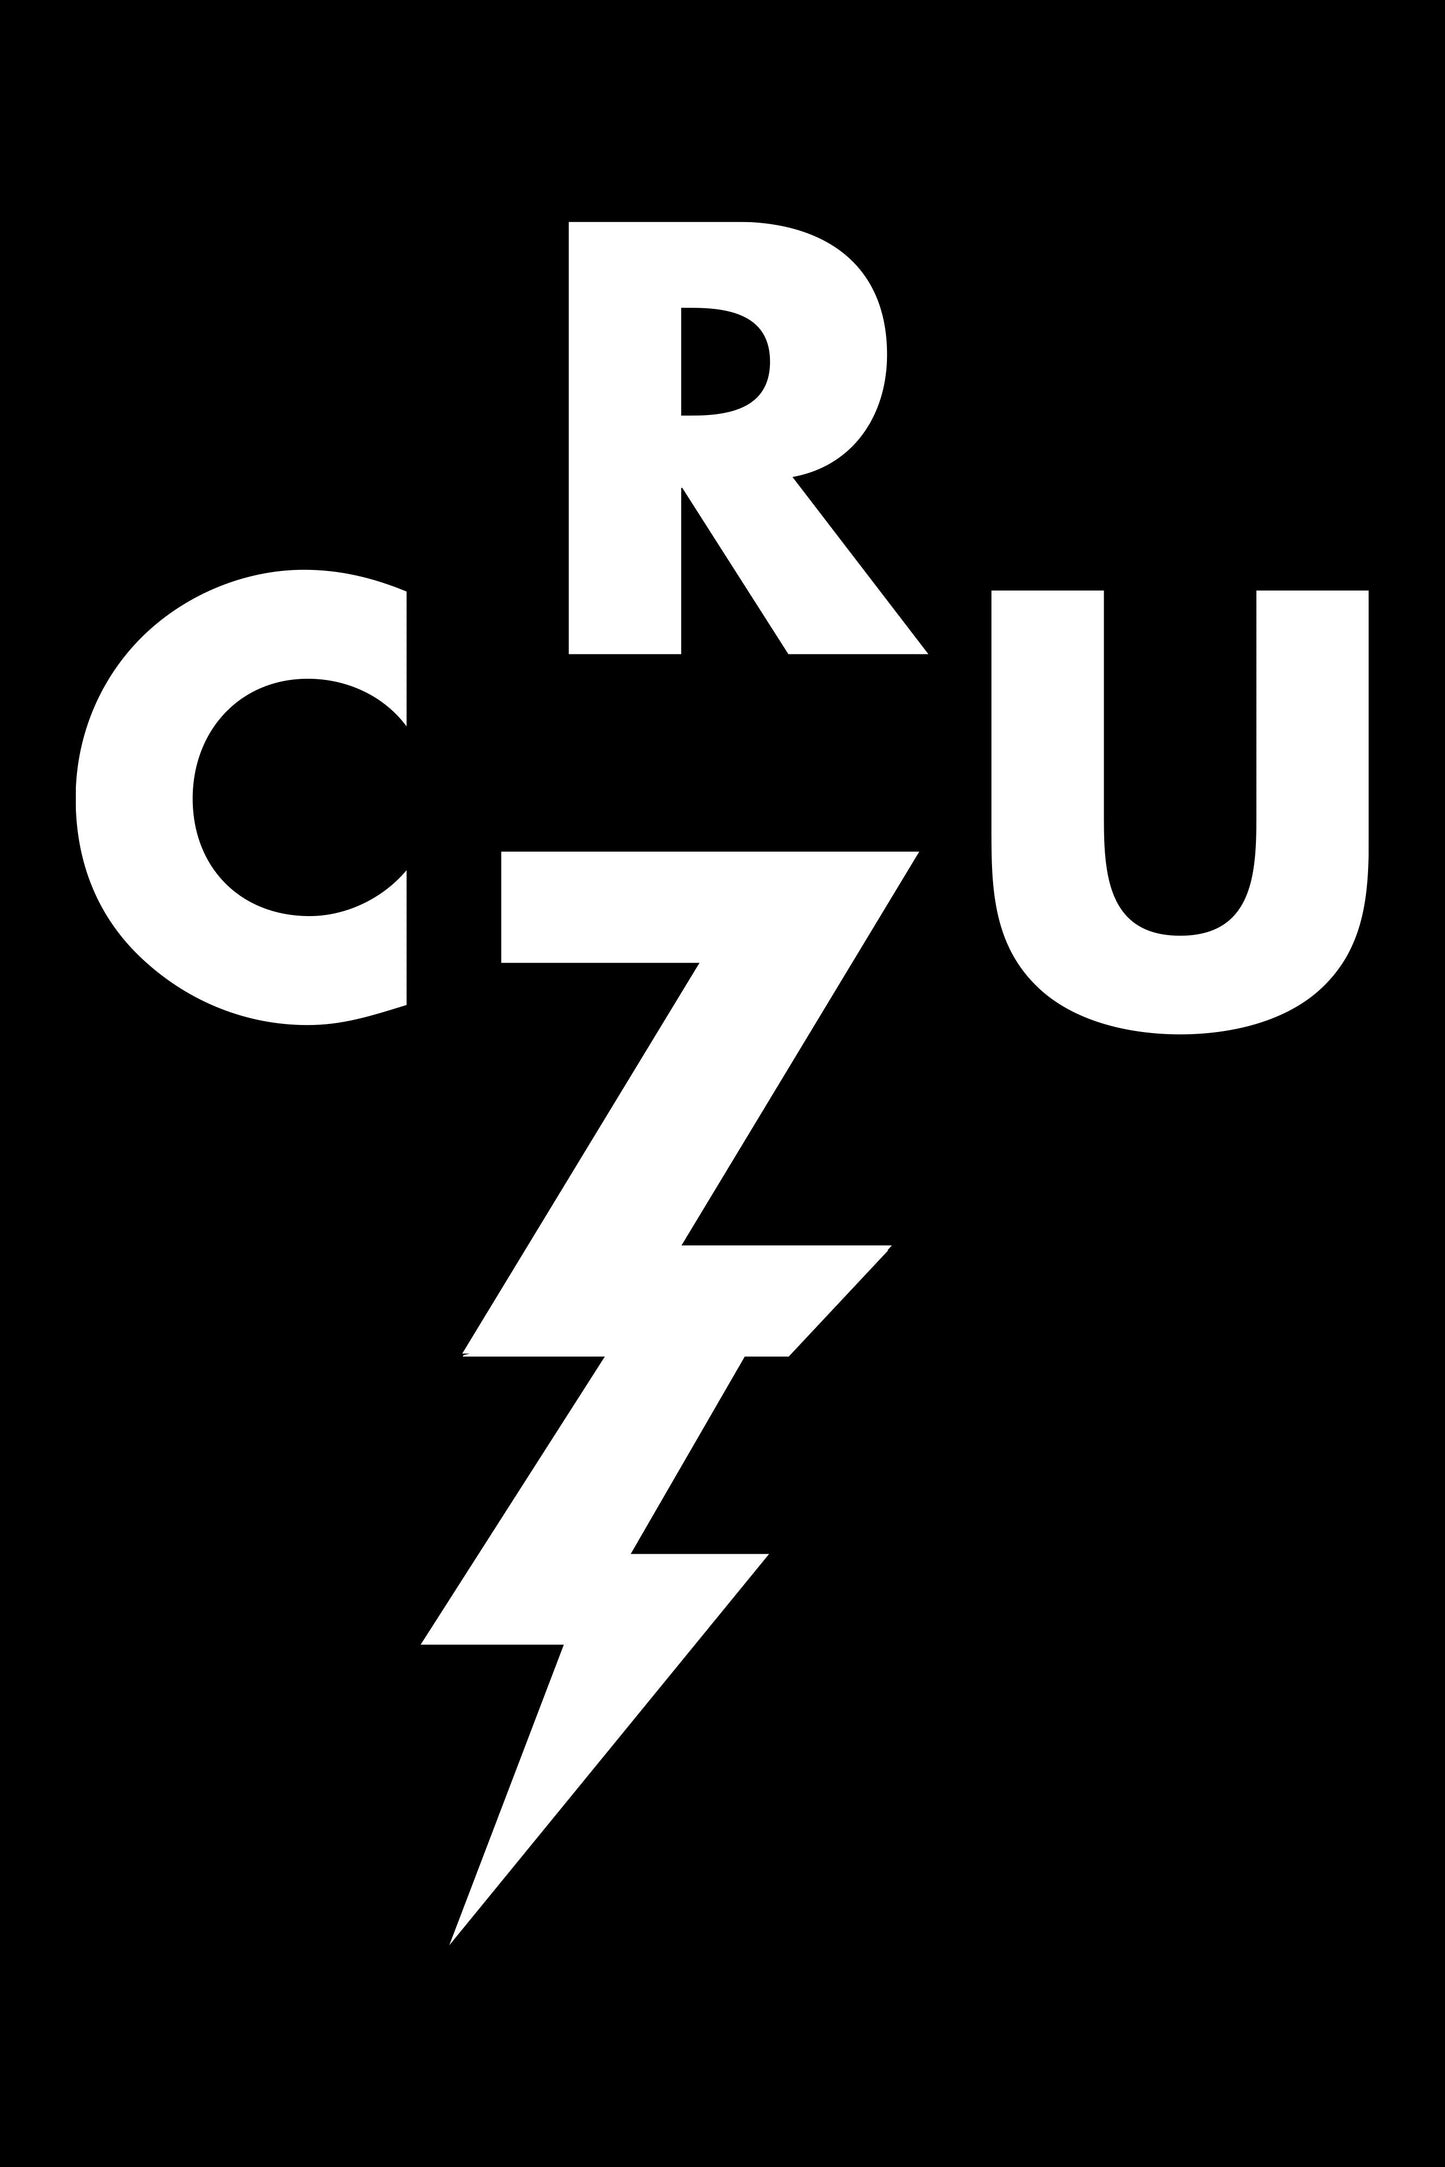 Dominick Cruz "CruzBolt Embroidered Limited Edition" t-shirt